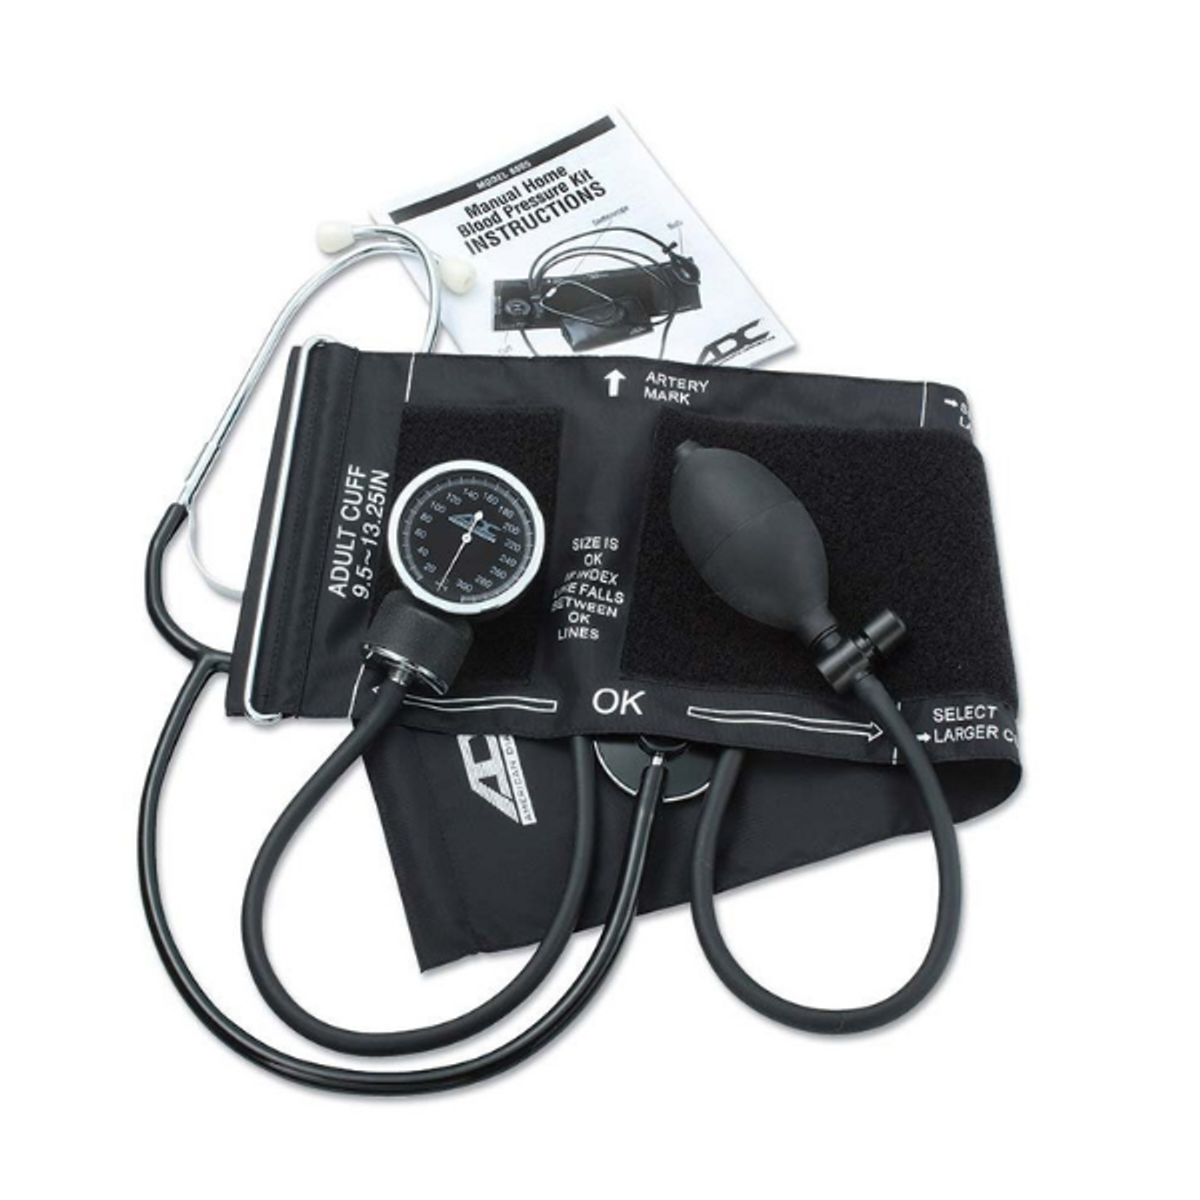 ADC Manual Home Blood Pressure Kit